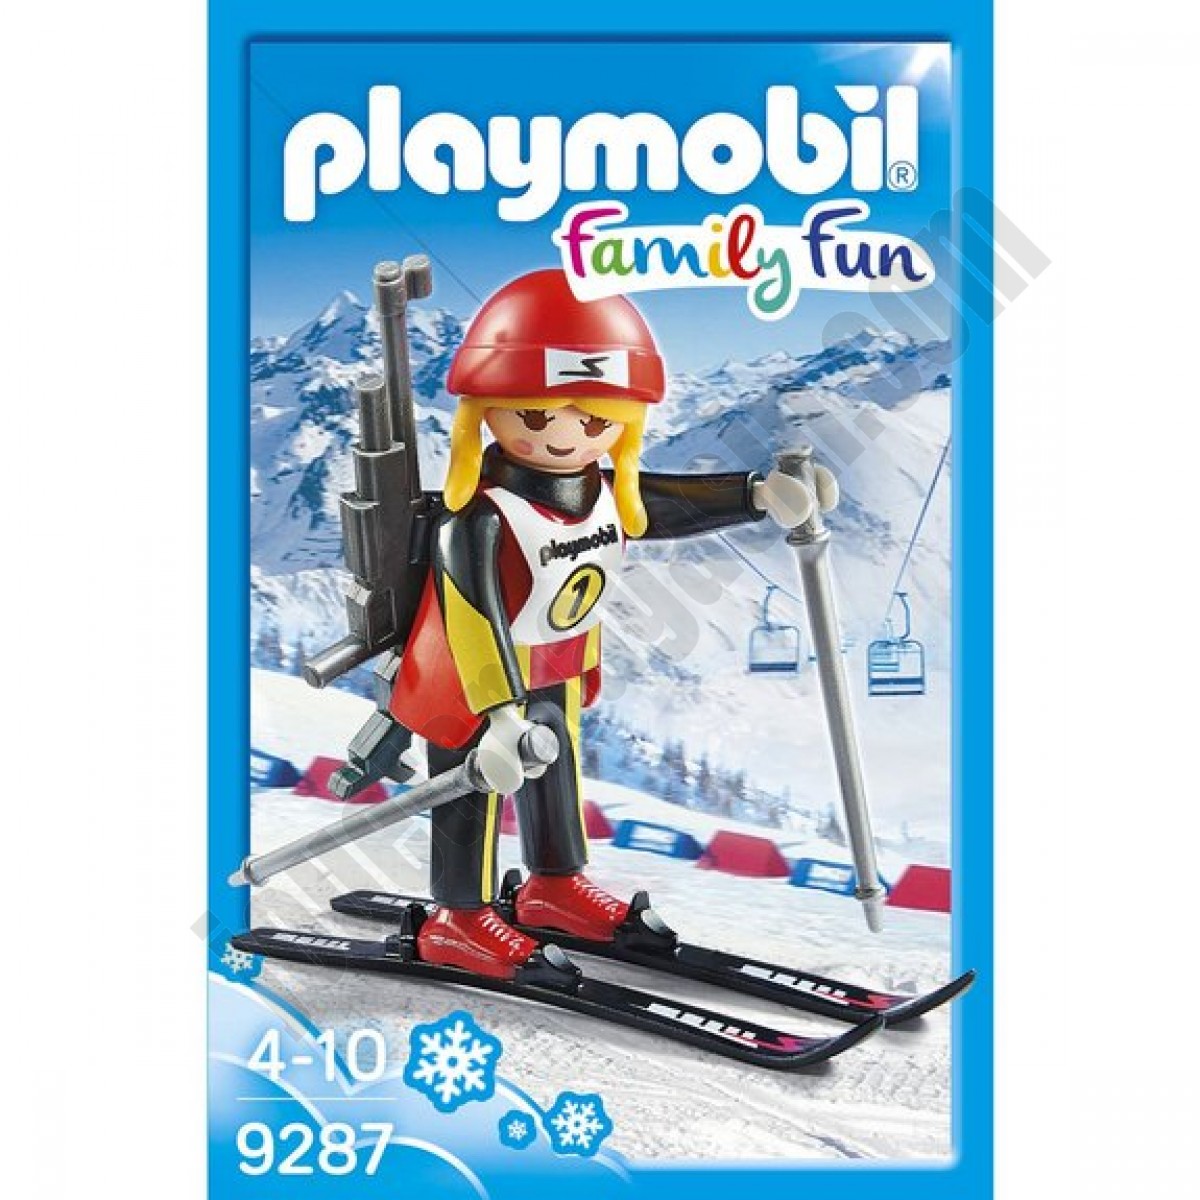 Biathlète Playmobil Family fun 9287 ◆◆◆ Nouveau - Biathlète Playmobil Family fun 9287 ◆◆◆ Nouveau